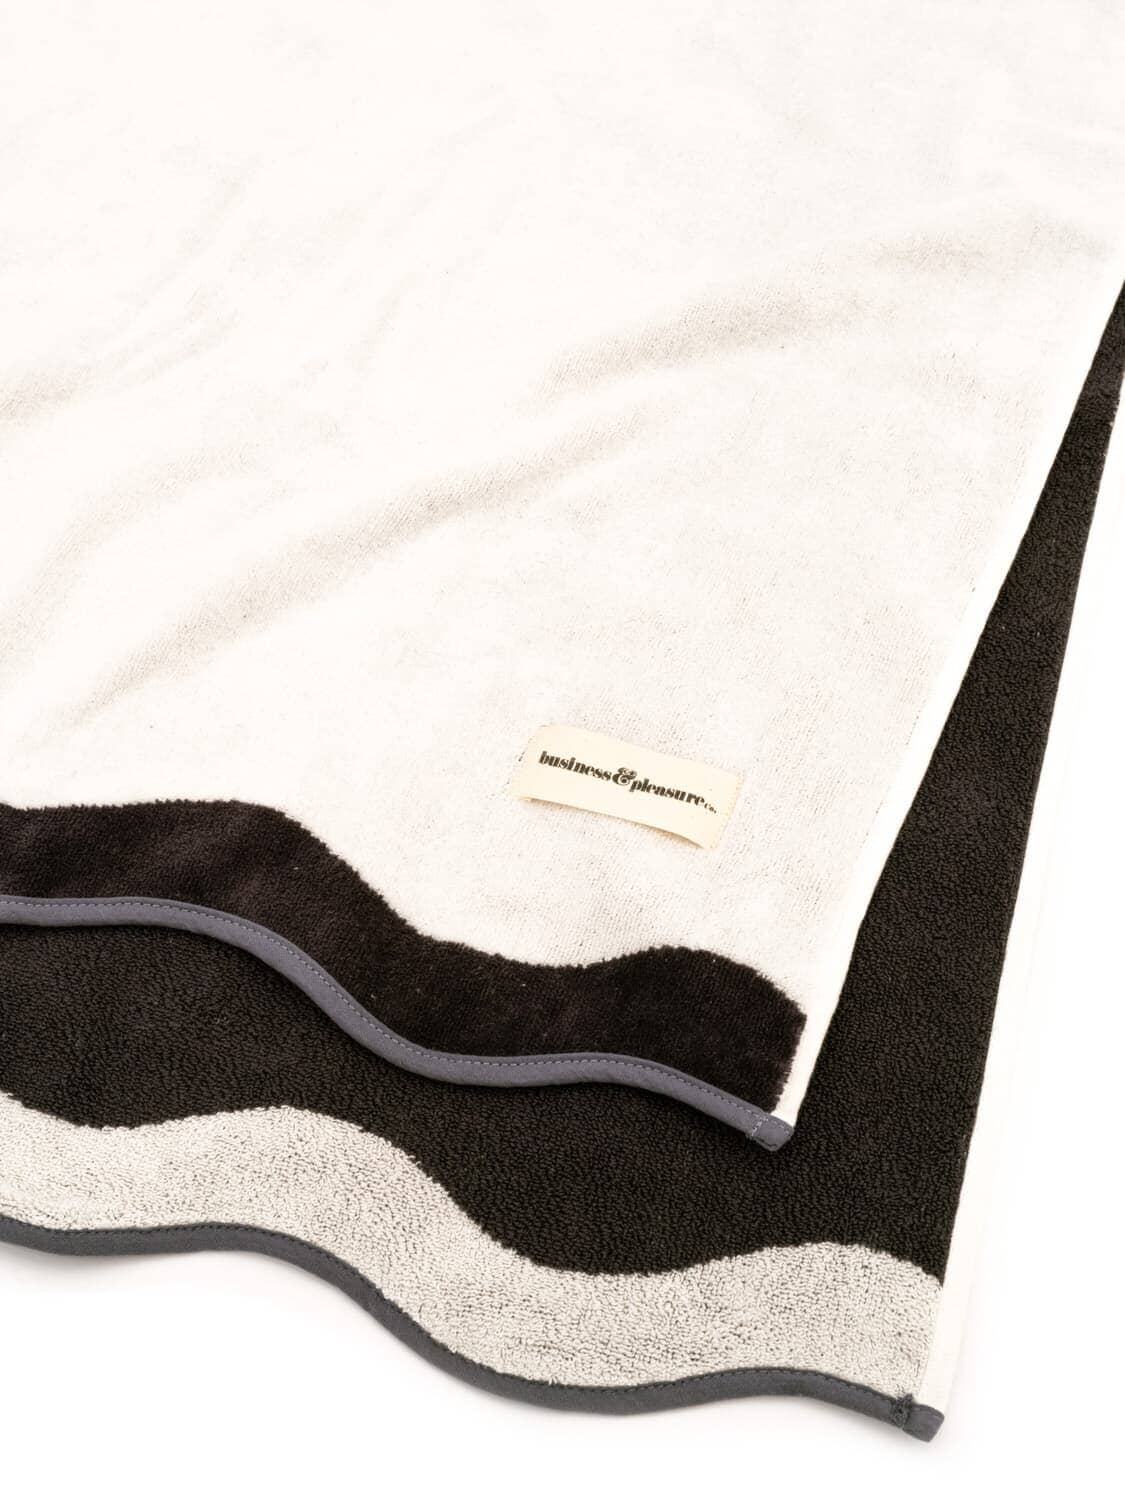 studio image of white riviera beach towel